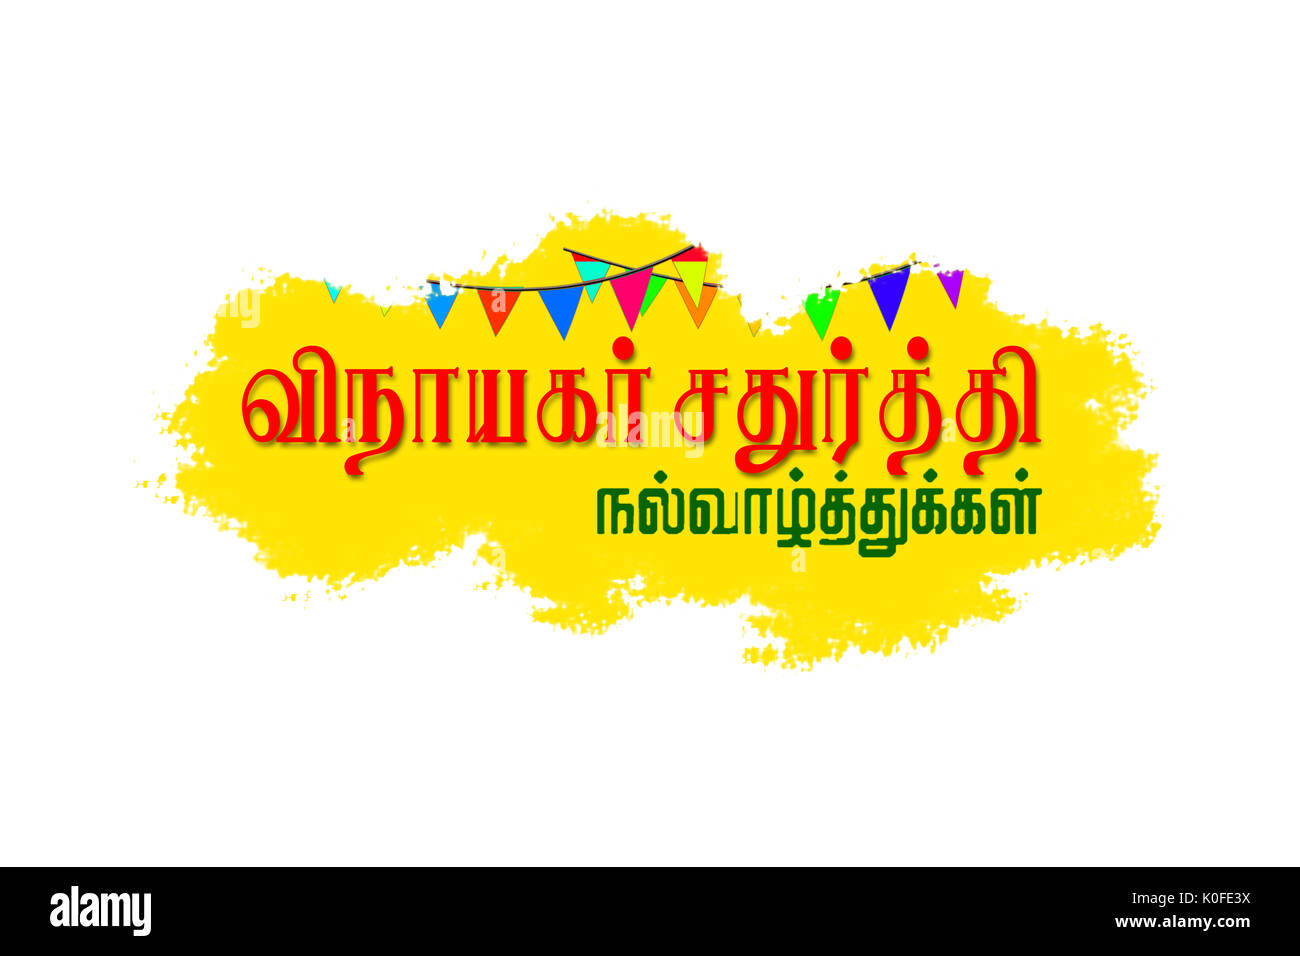 Happy Ganesh Chaturthi Greeting Card in Tamil Stock Photo - Alamy